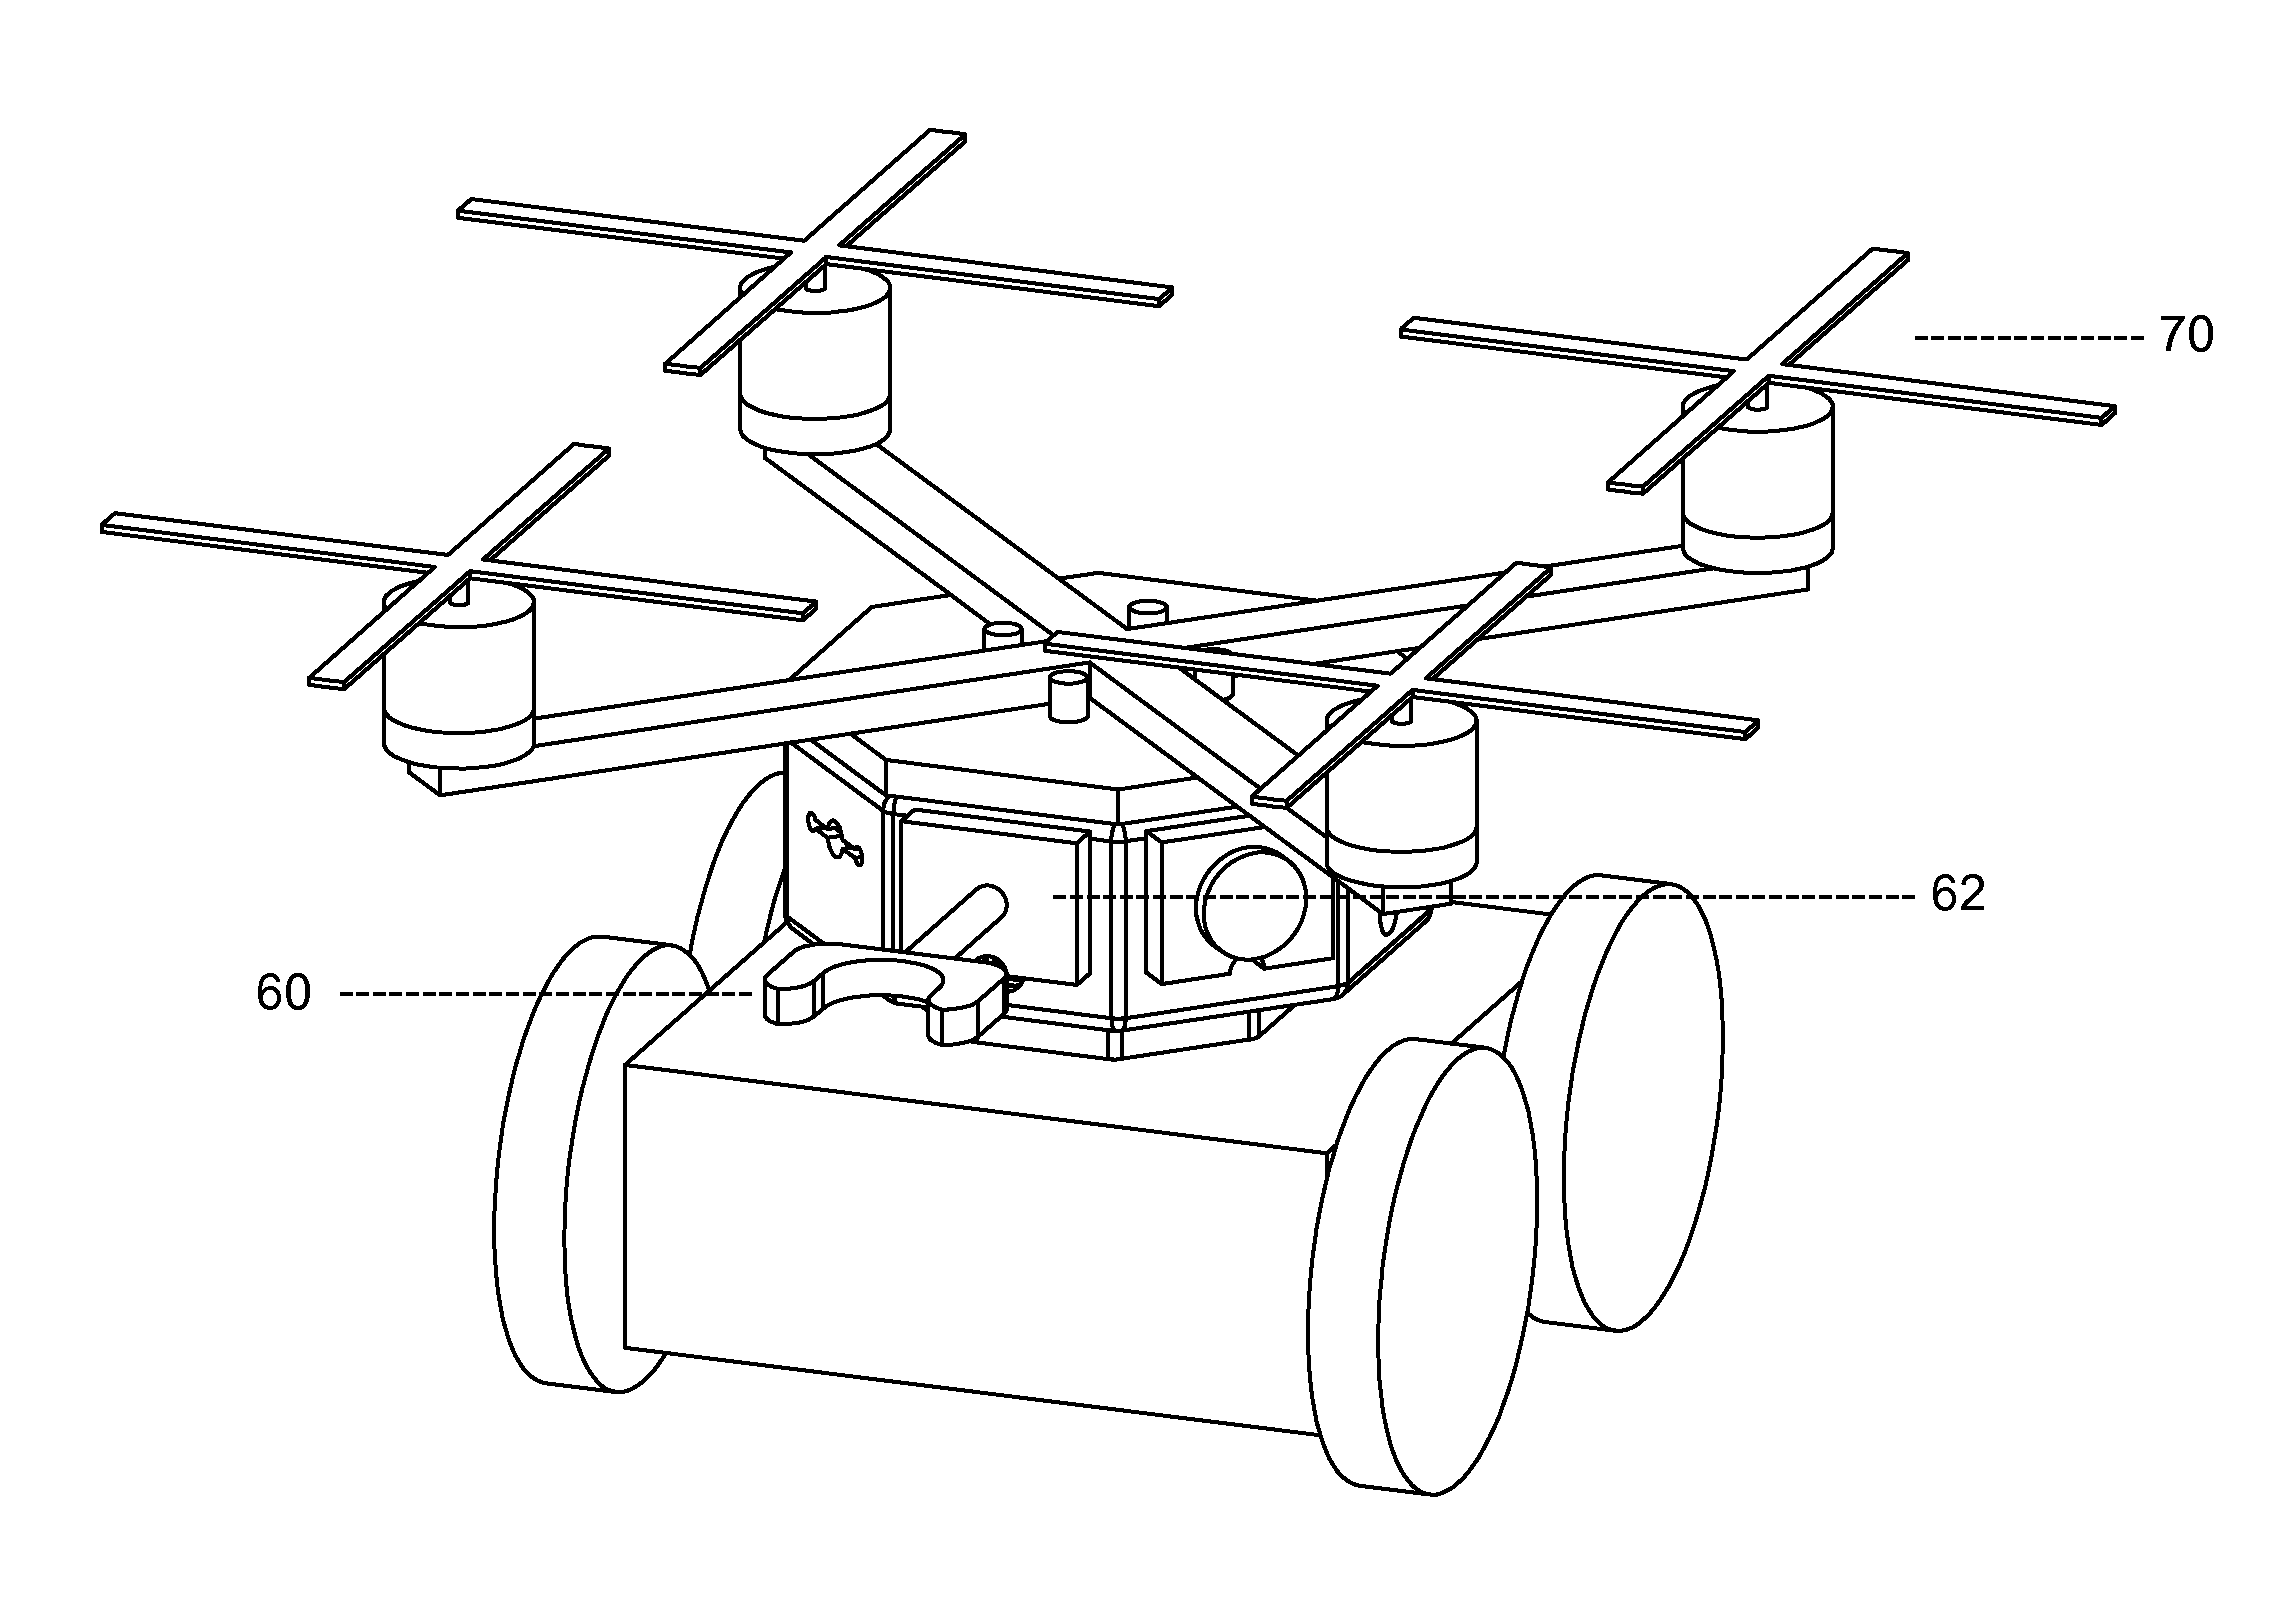 Interchangeable Modular Robotic Unit